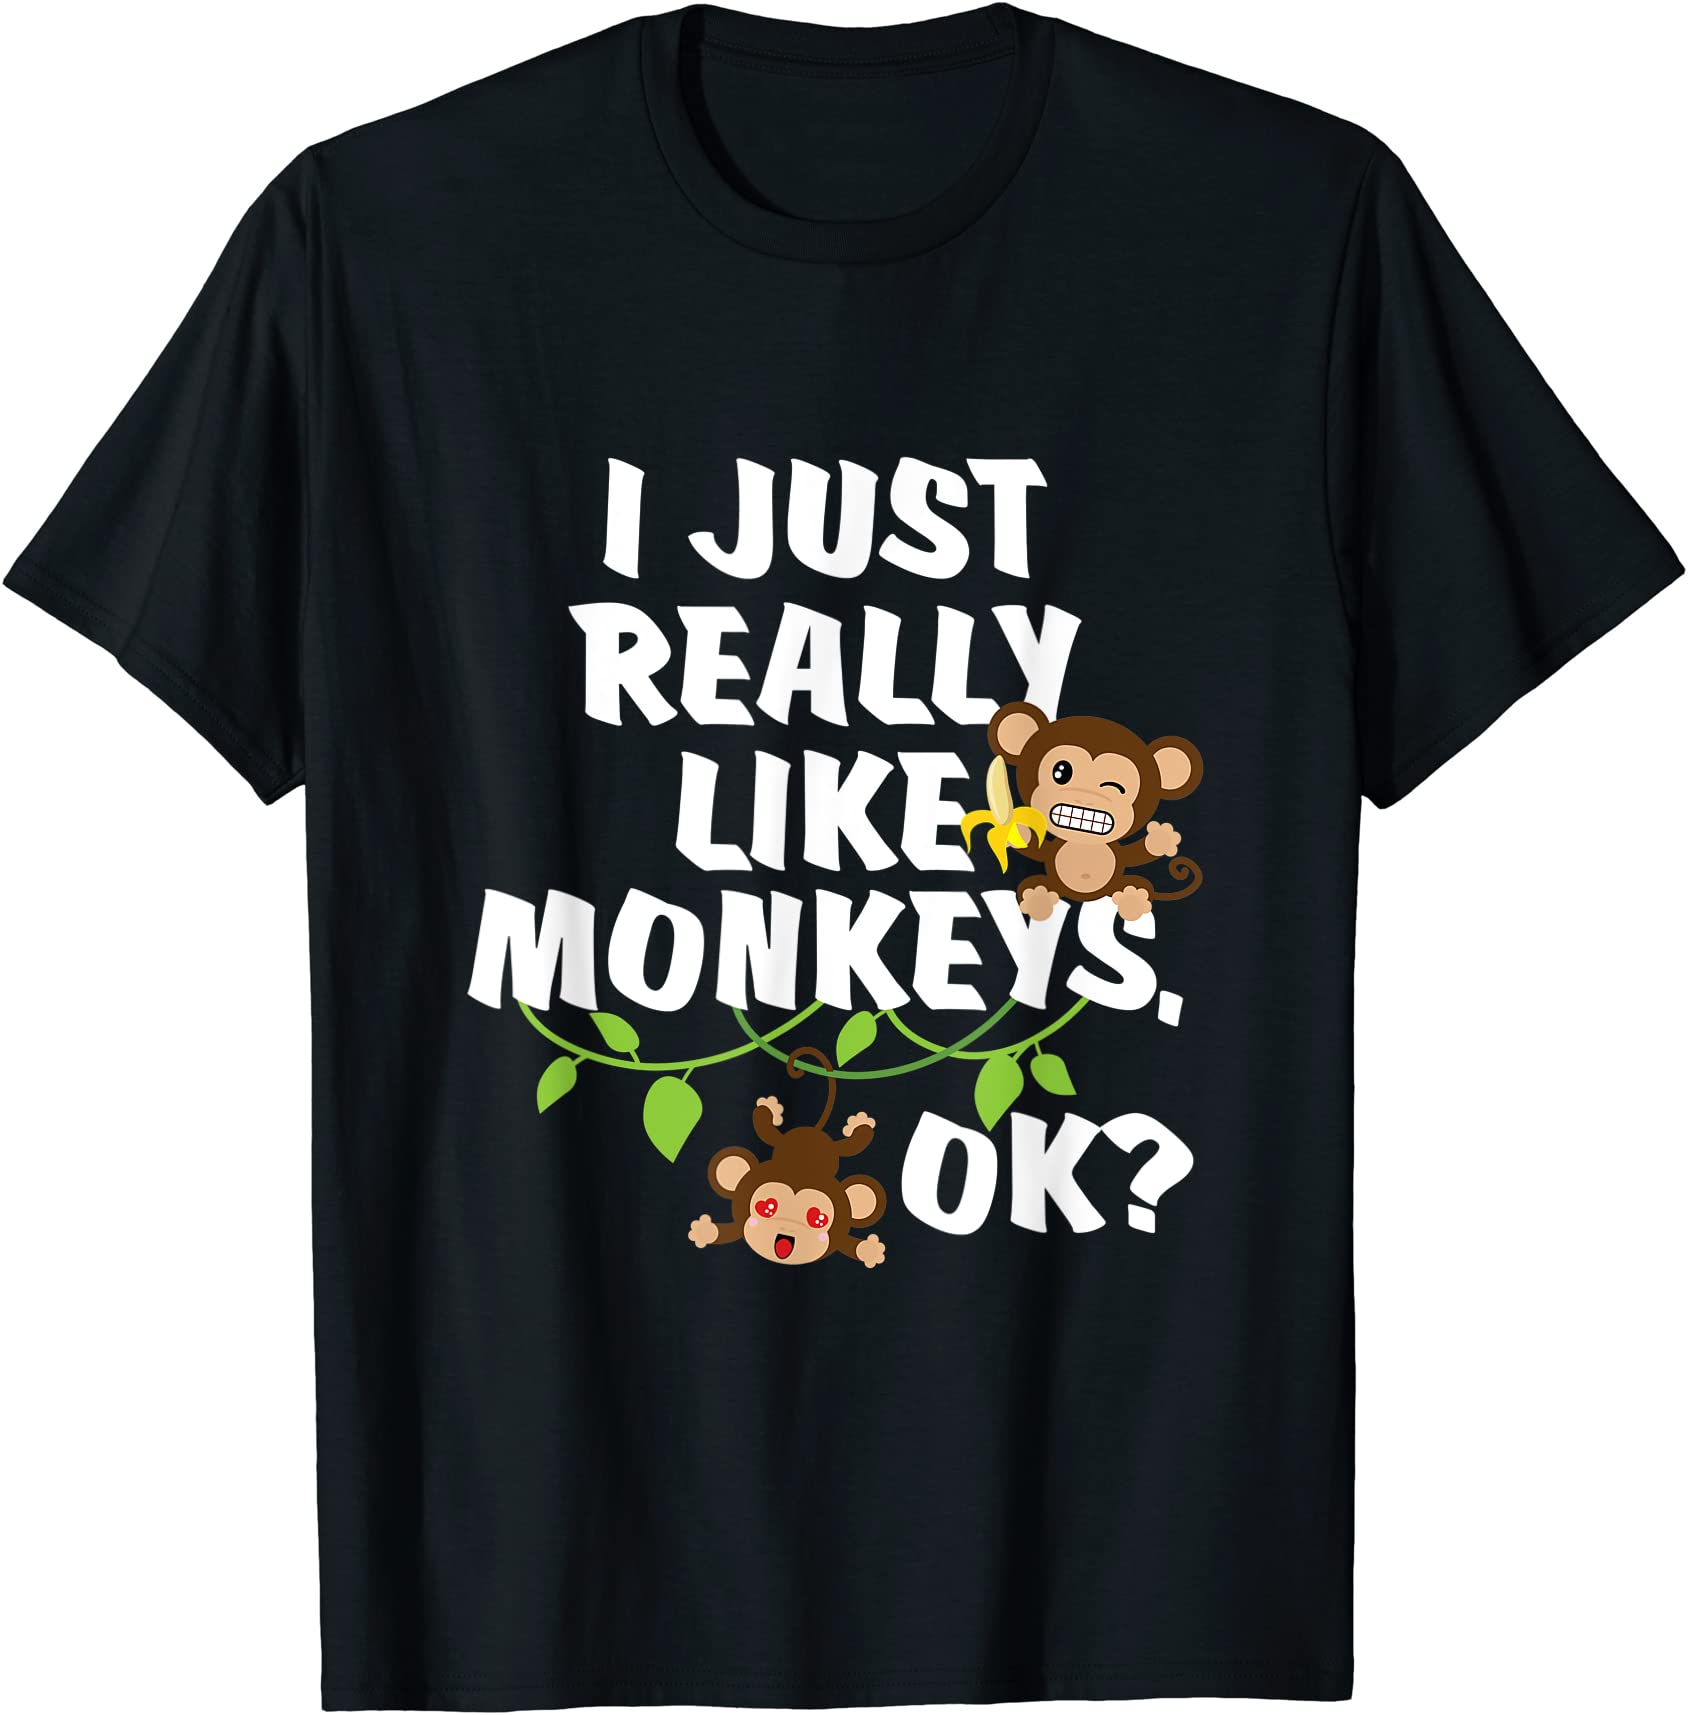 i just really like monkeys ok funny monkey gift t shirt men - Buy t ...